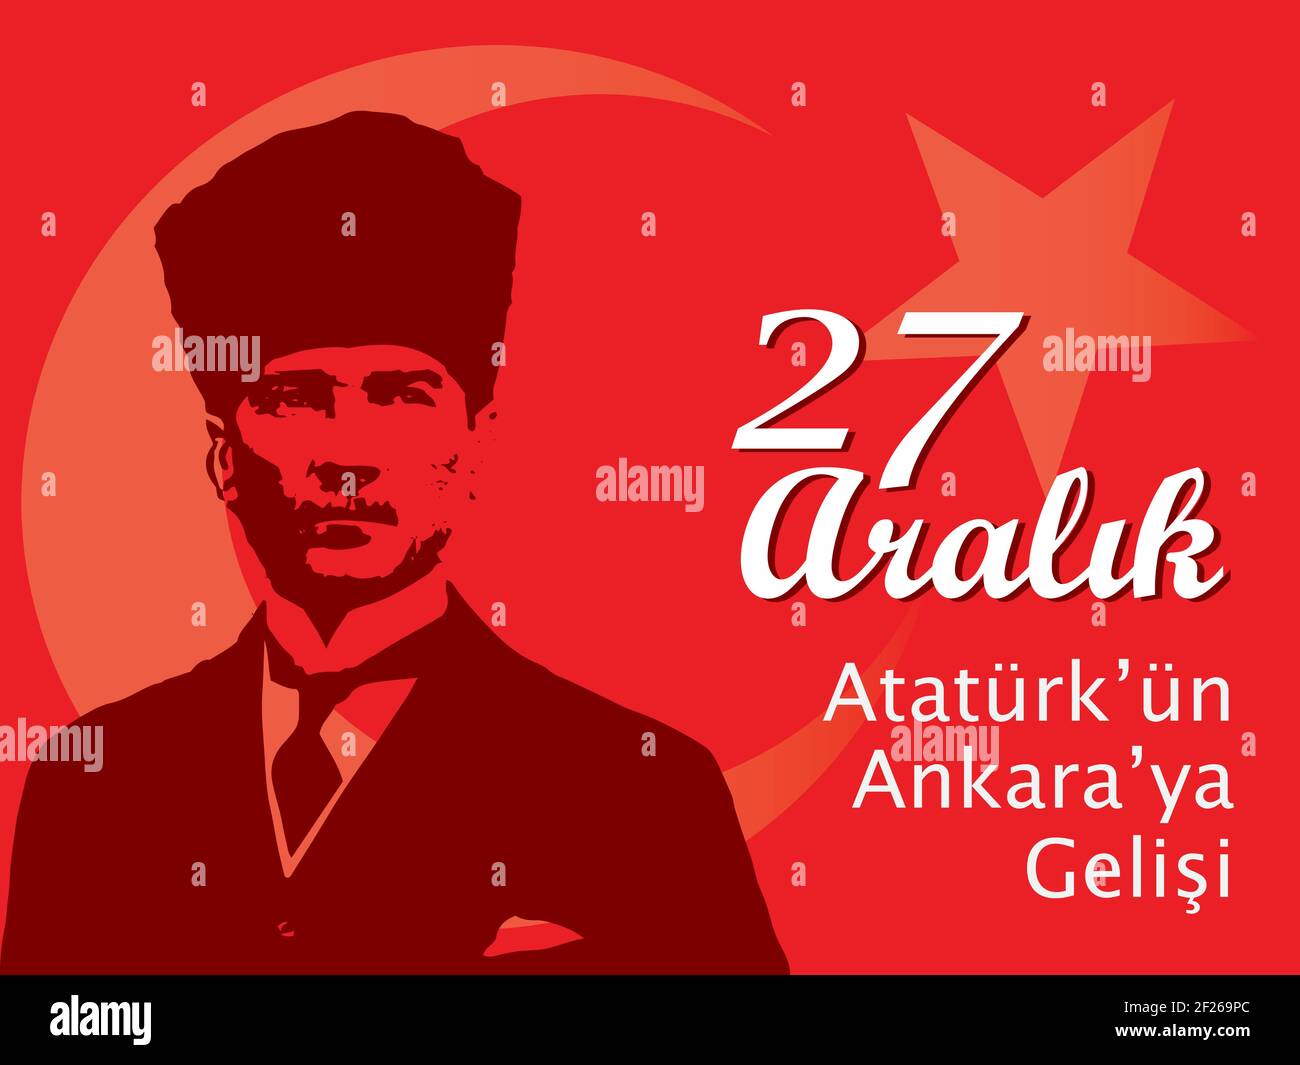 27 Aralik Ataturk'un Ankara'ya gelisi. Translation: Ataturk's visit to Ankara, December 27. Stock Vector